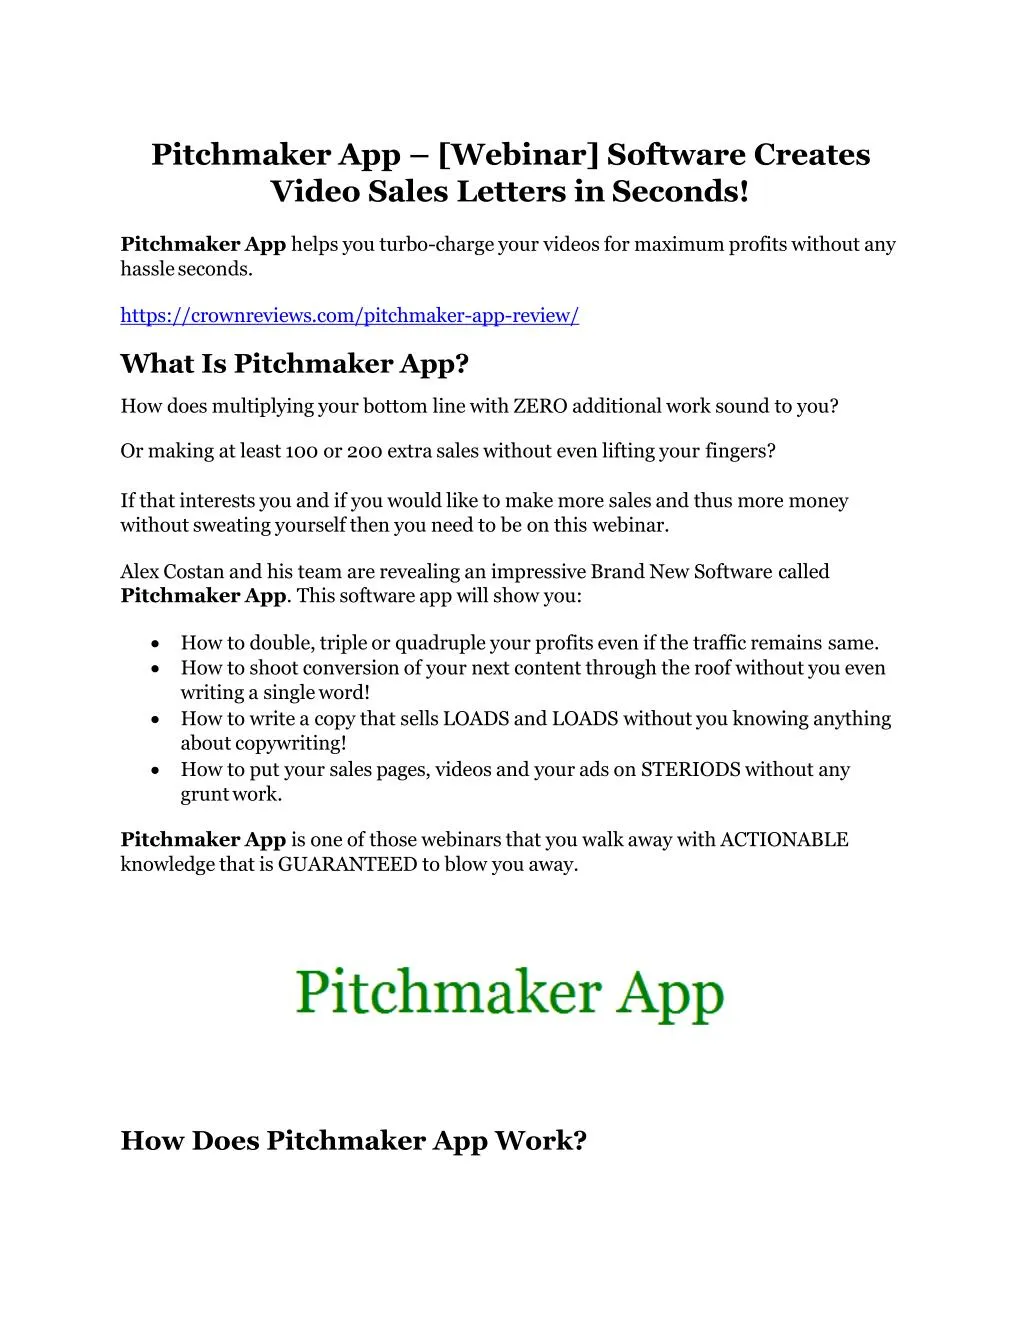 pitchmaker app webinar software creates video